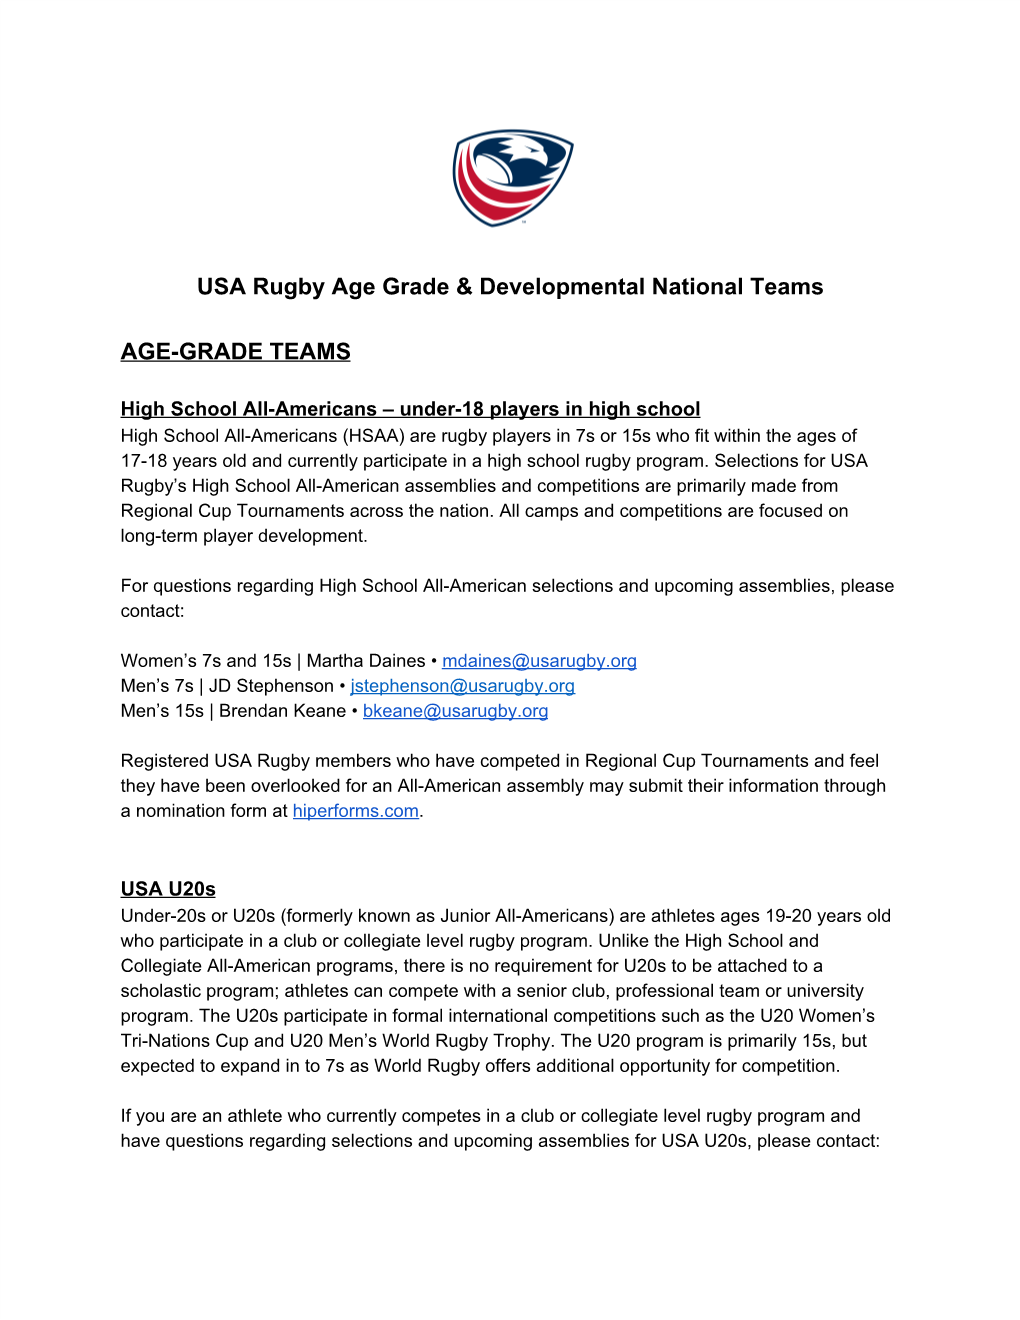 USA Rugby Age Grade & Developmental National Teams AGE-GRADE TEAMS